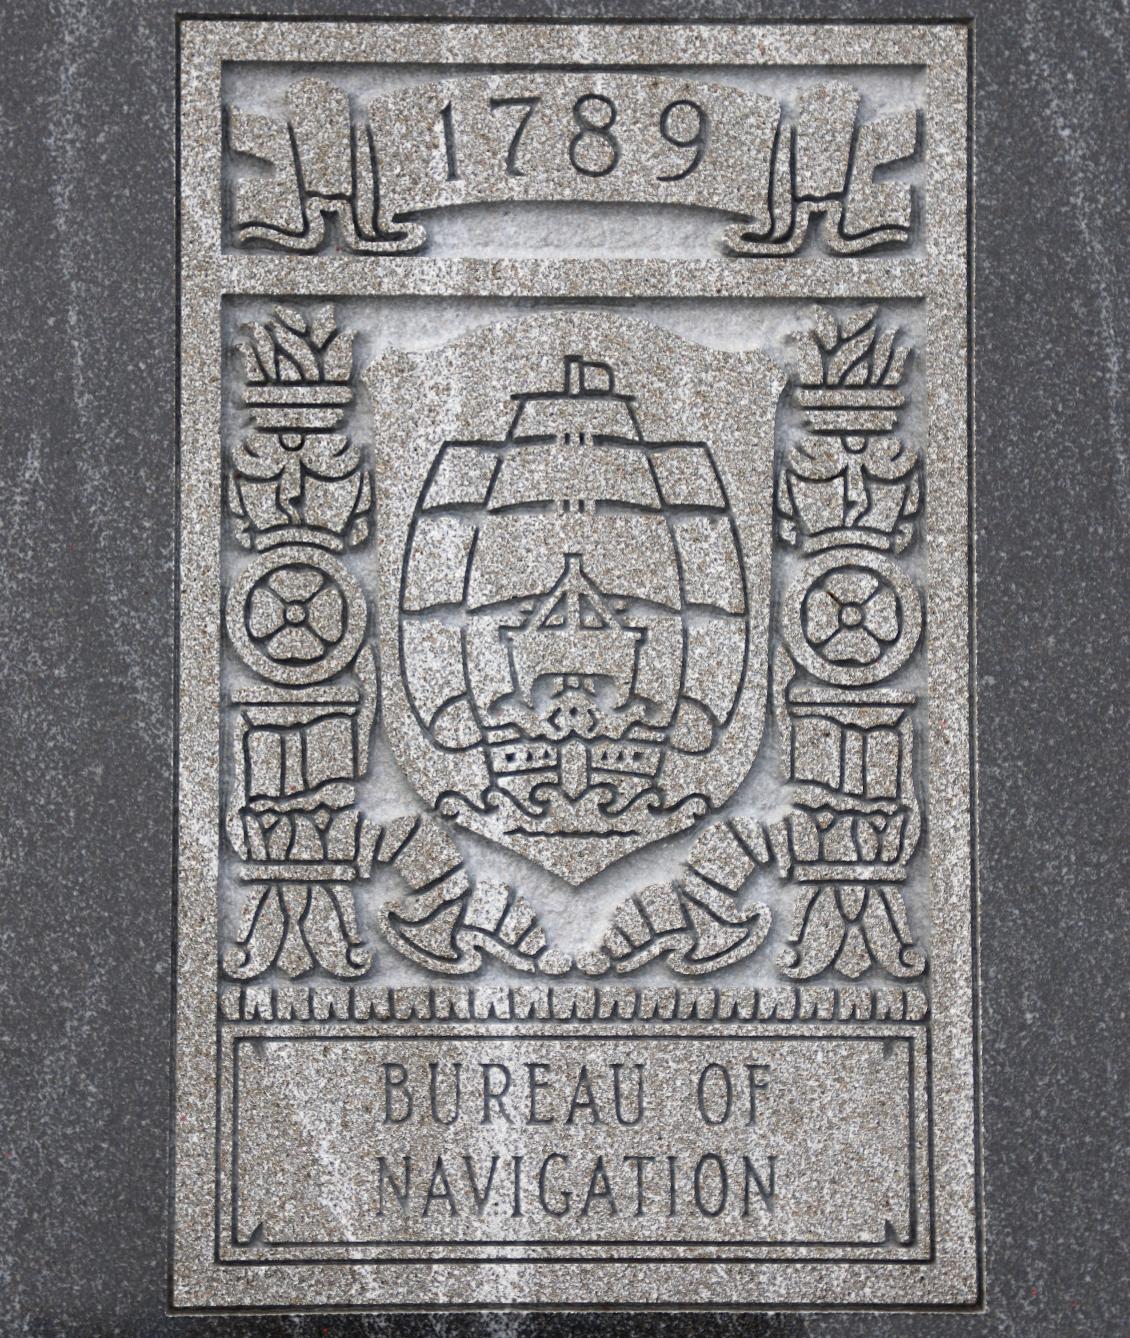 Cape May Training Center - Eternal Flame Coast Guard Services Monument - Bureau of Navigation